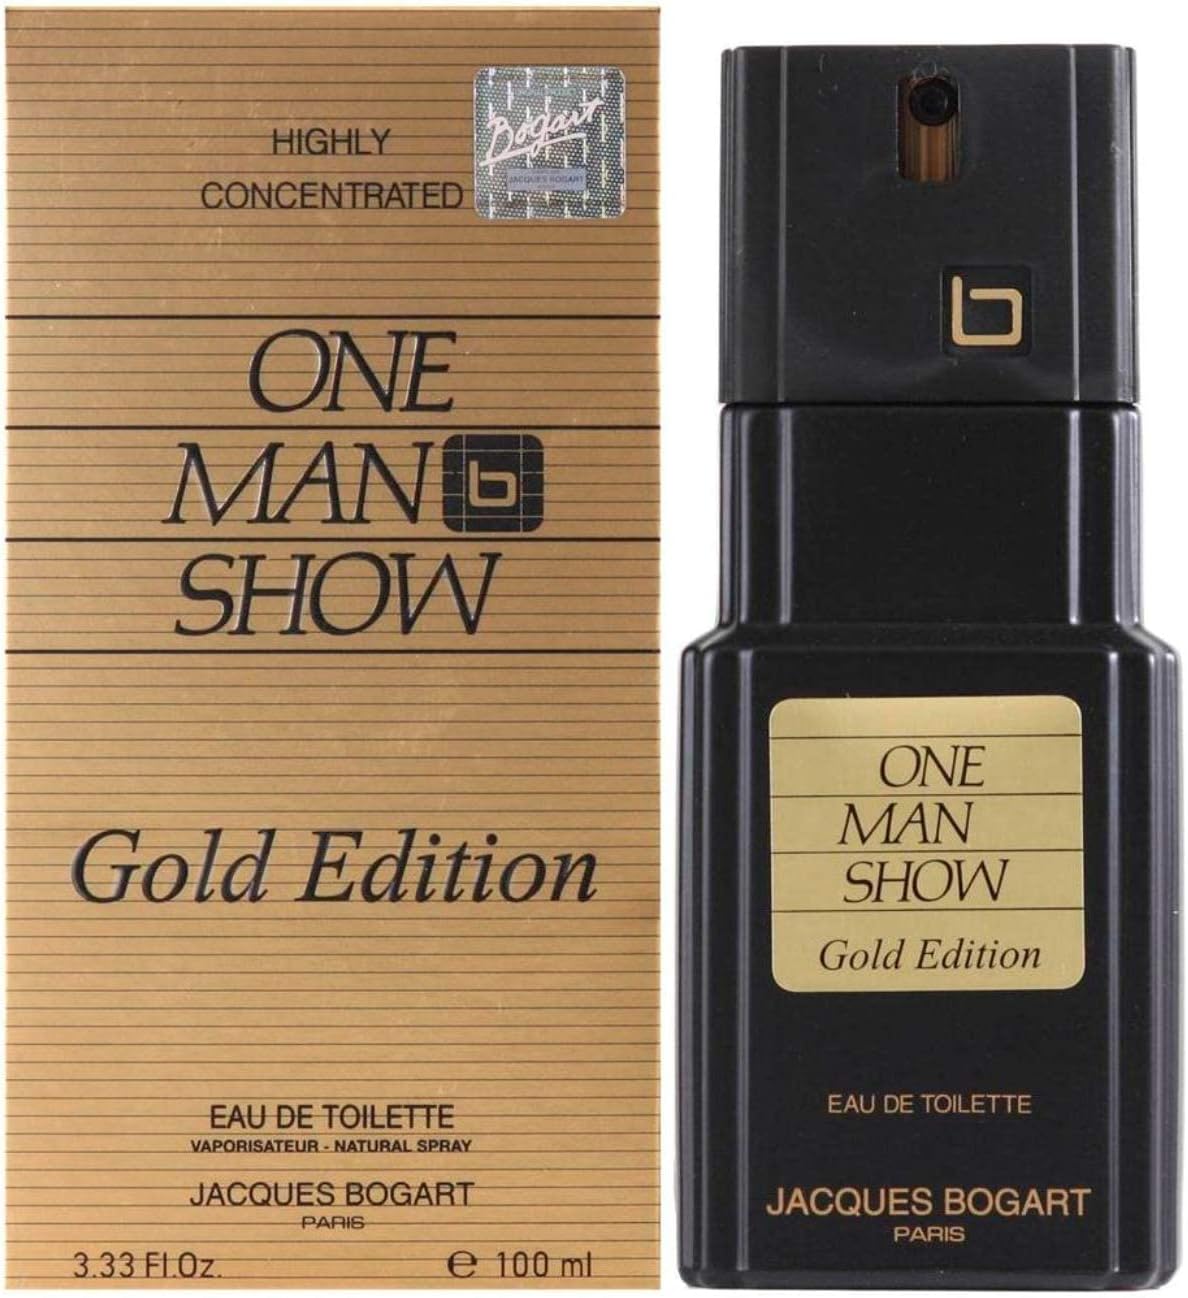 One Man Show Gold Edition 100 ml EDT Spray.